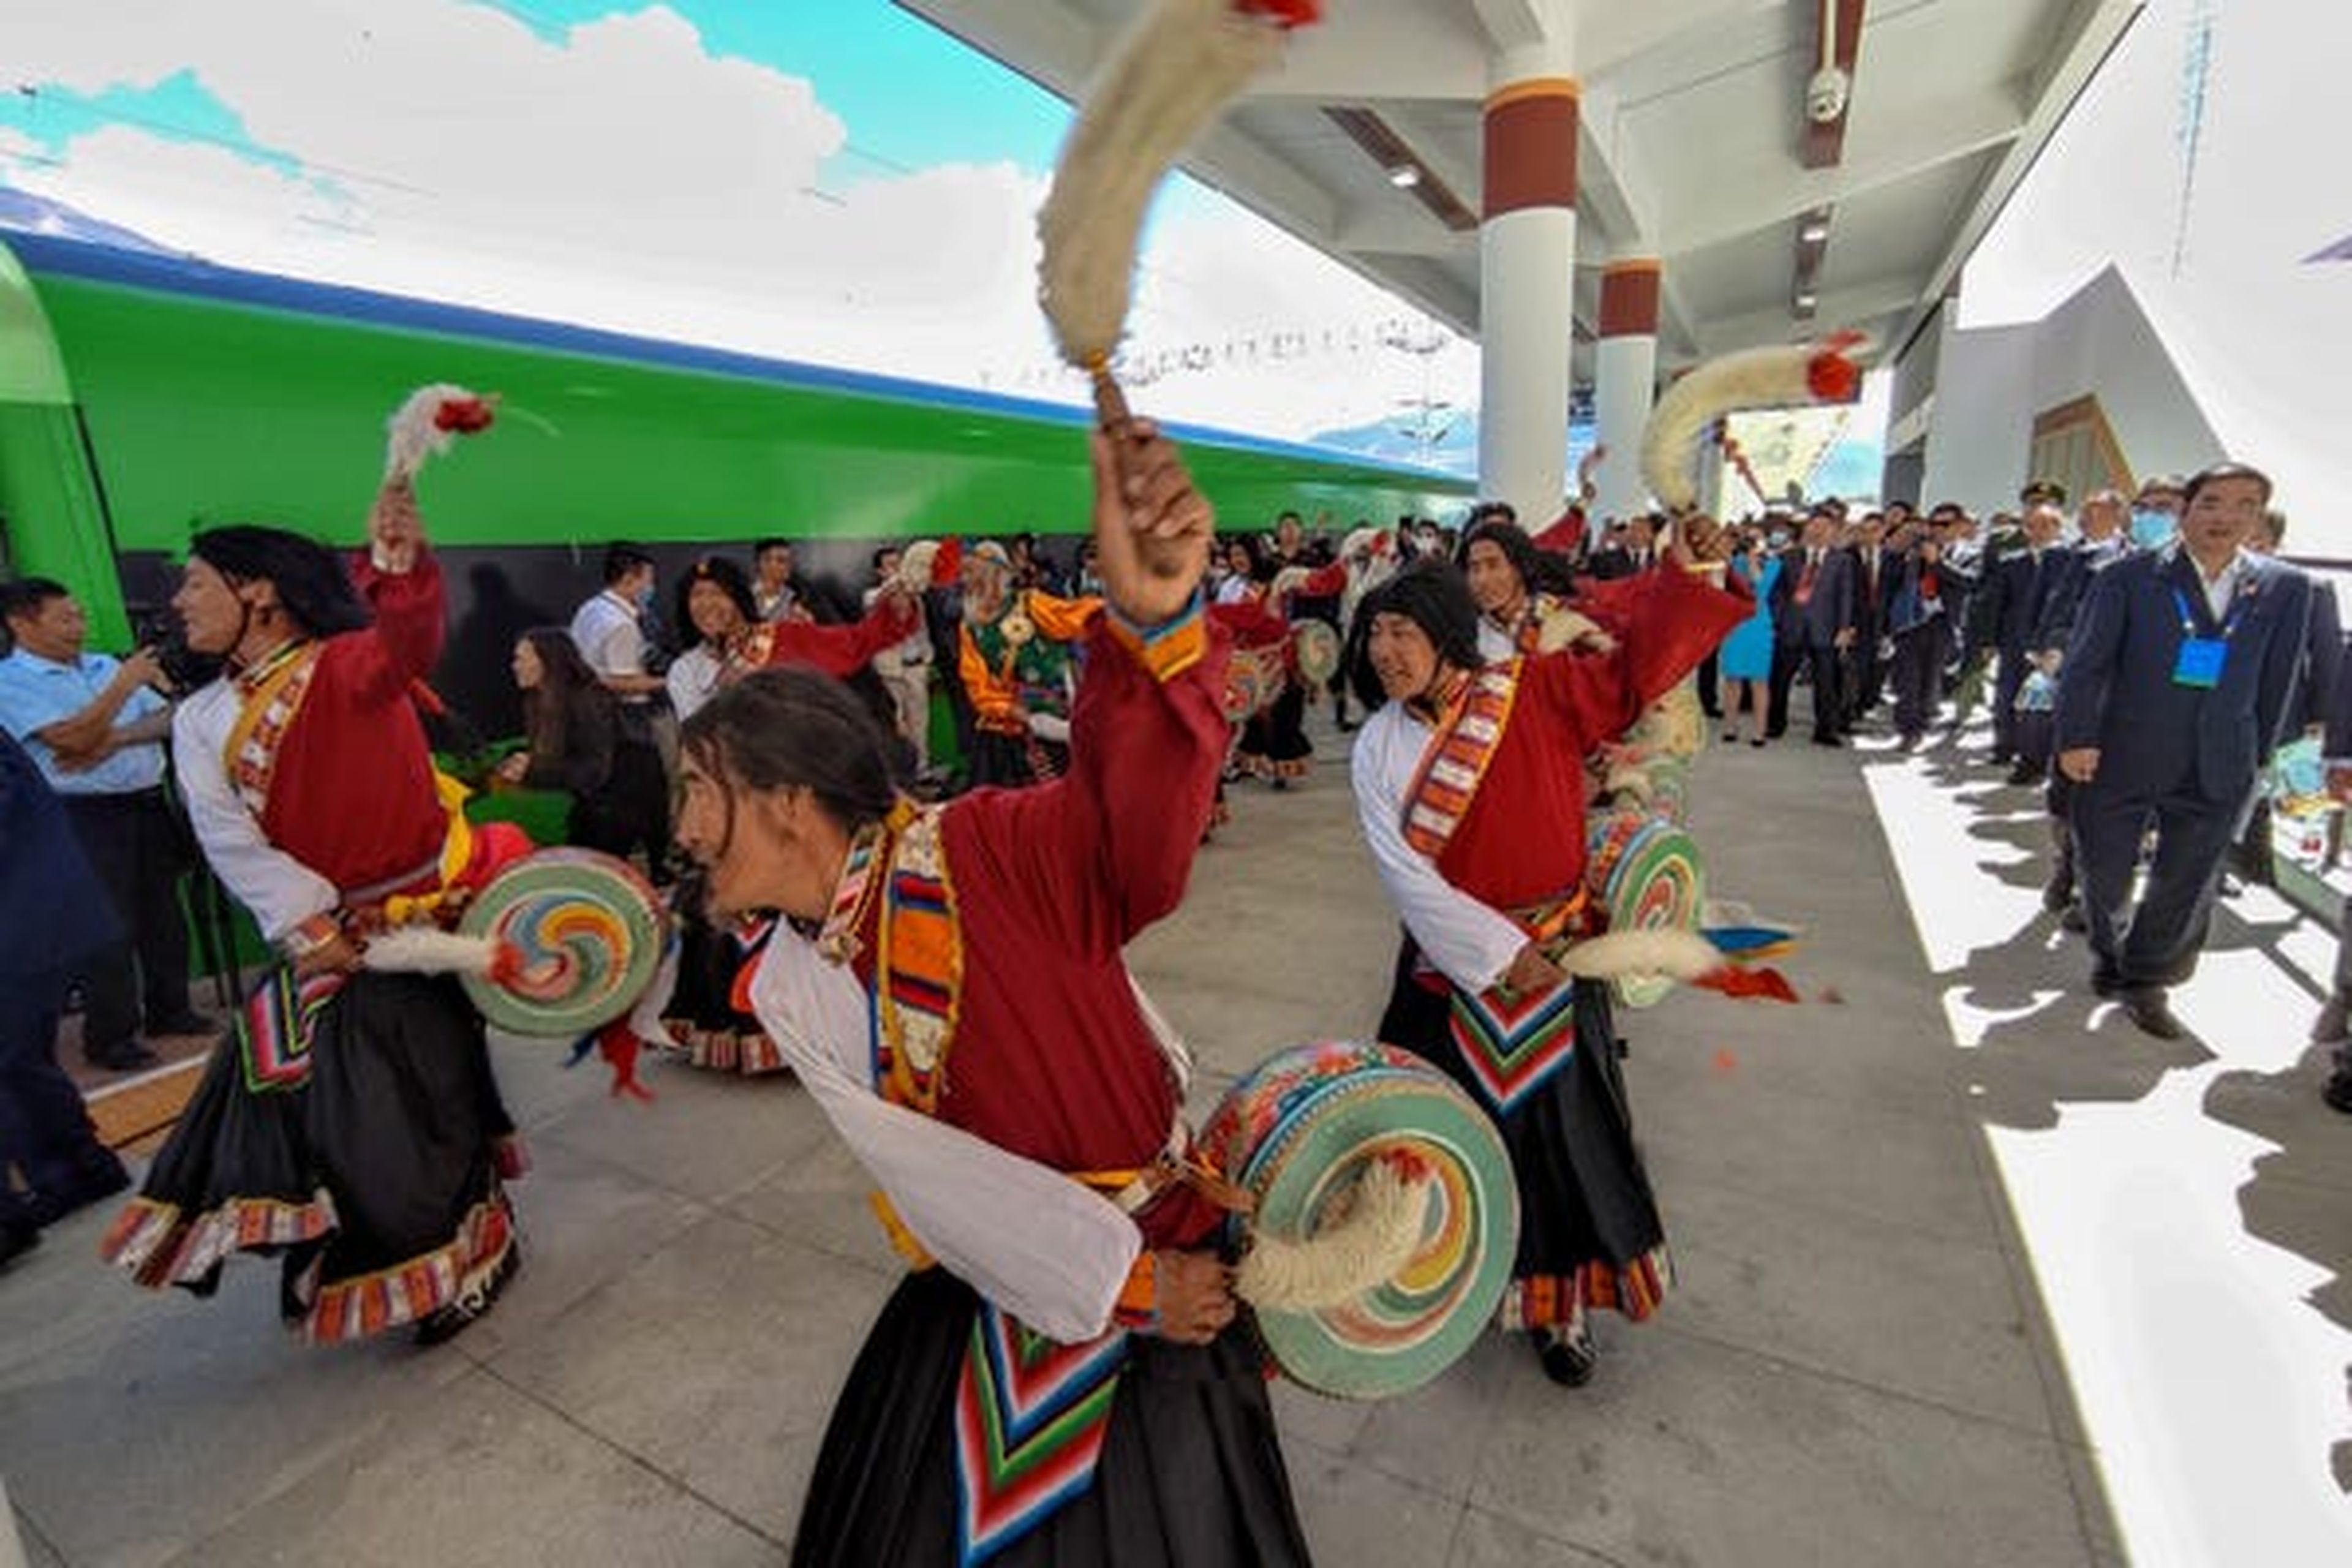 Los residentes locales bailan junto al primer tren bala Fuxing en la estación de tren de Lhasa en el ferrocarril de Lhasa-Nyingchi.